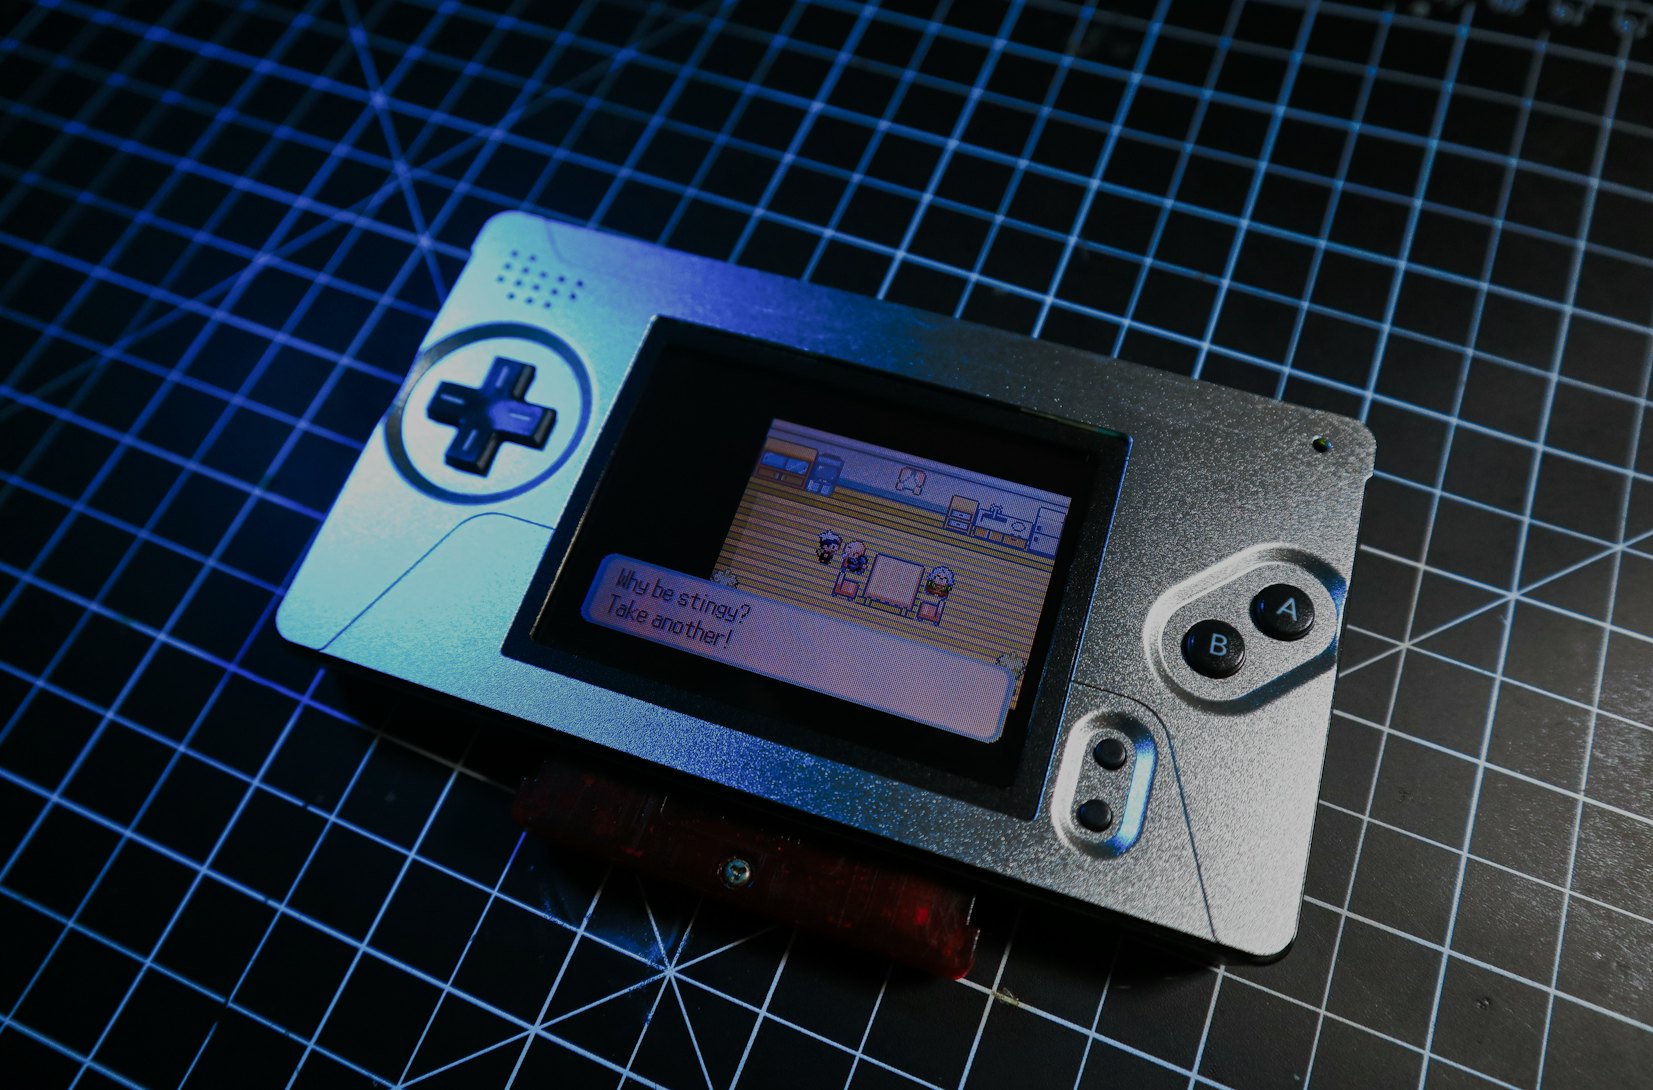 Video Game Console Card, Pokemon Emerald Box, Game Pokemon Nds